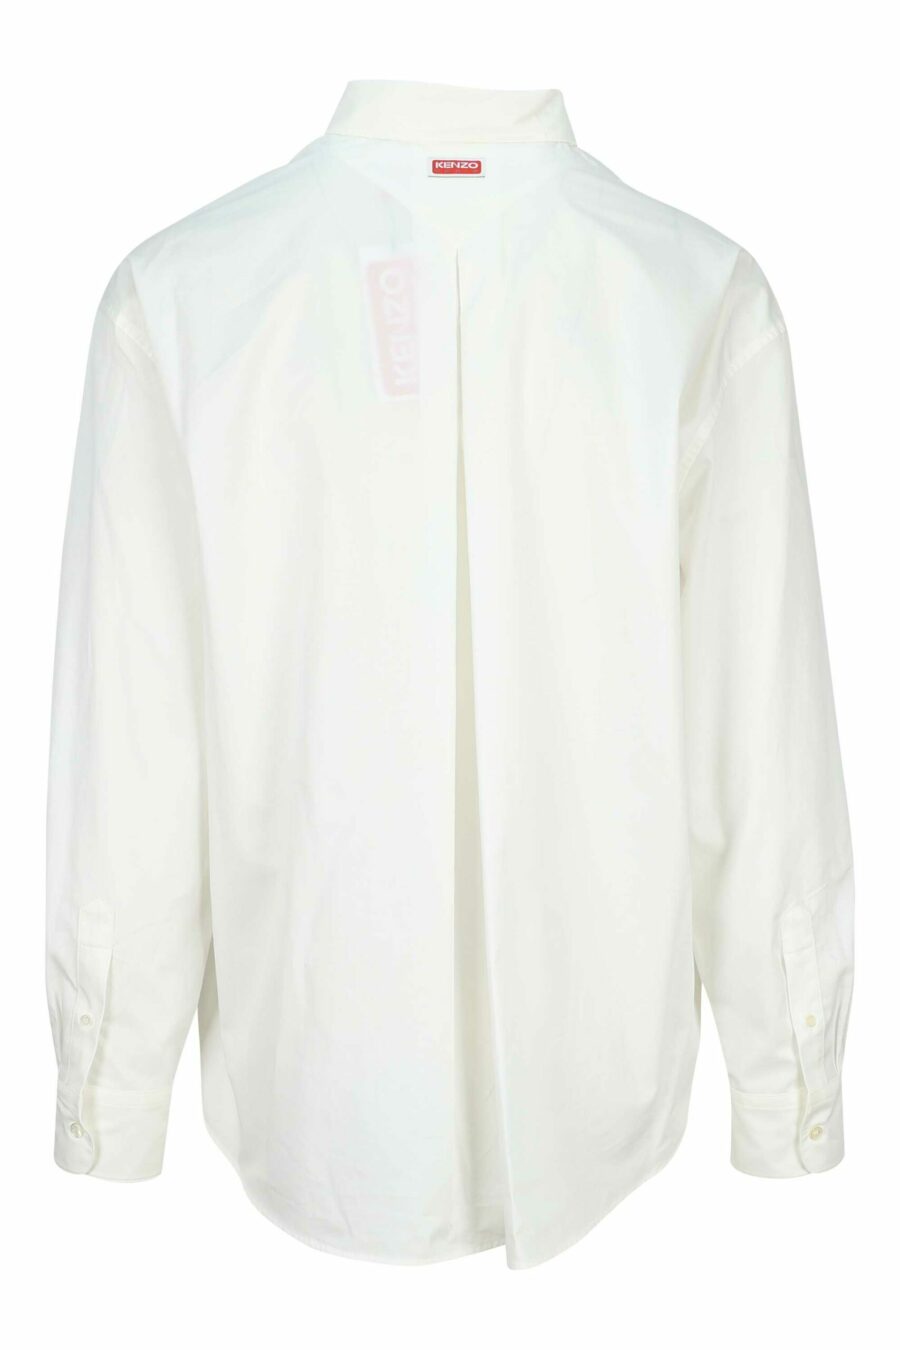 White shirt with tiger maxilogo - 3612230647893 1 scaled